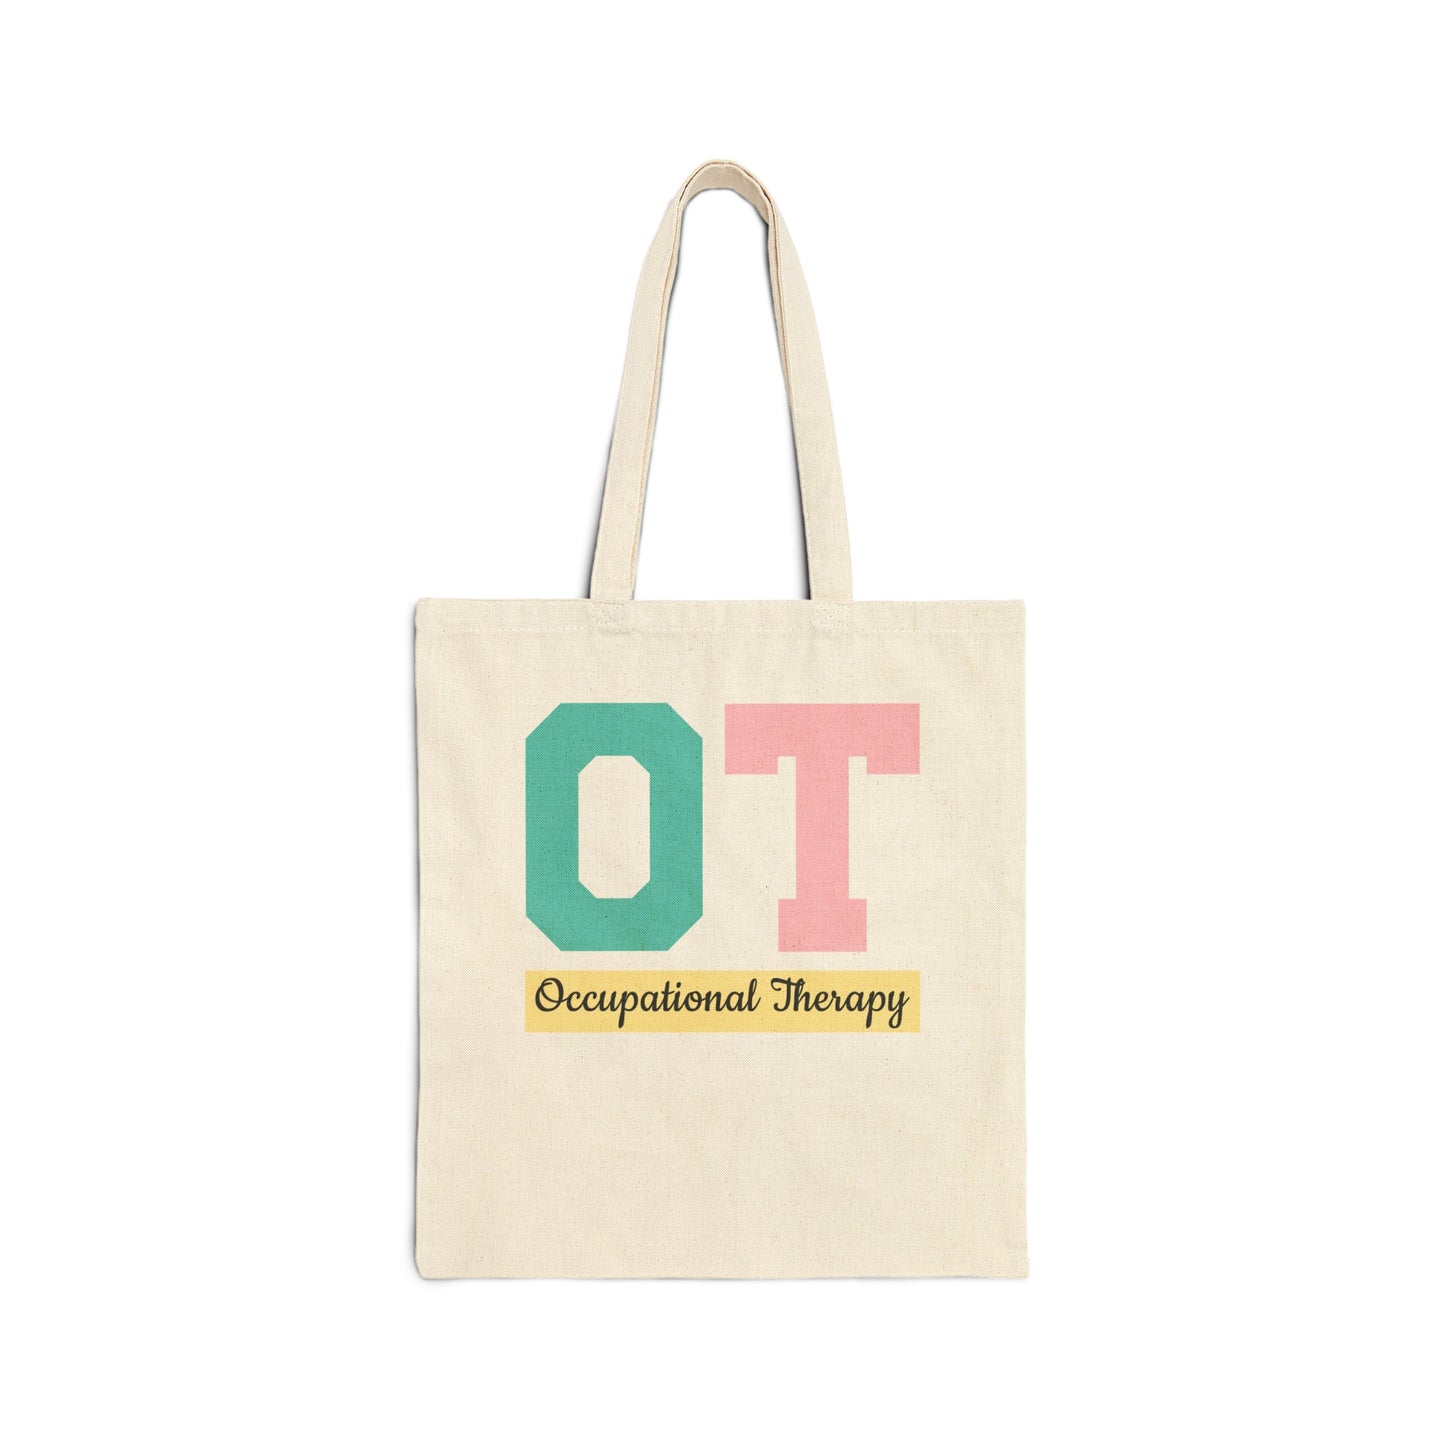 OT Tote Bag, Occupational Therapist Tote Bag, Therapist Tote Bag, OT Tote Bag